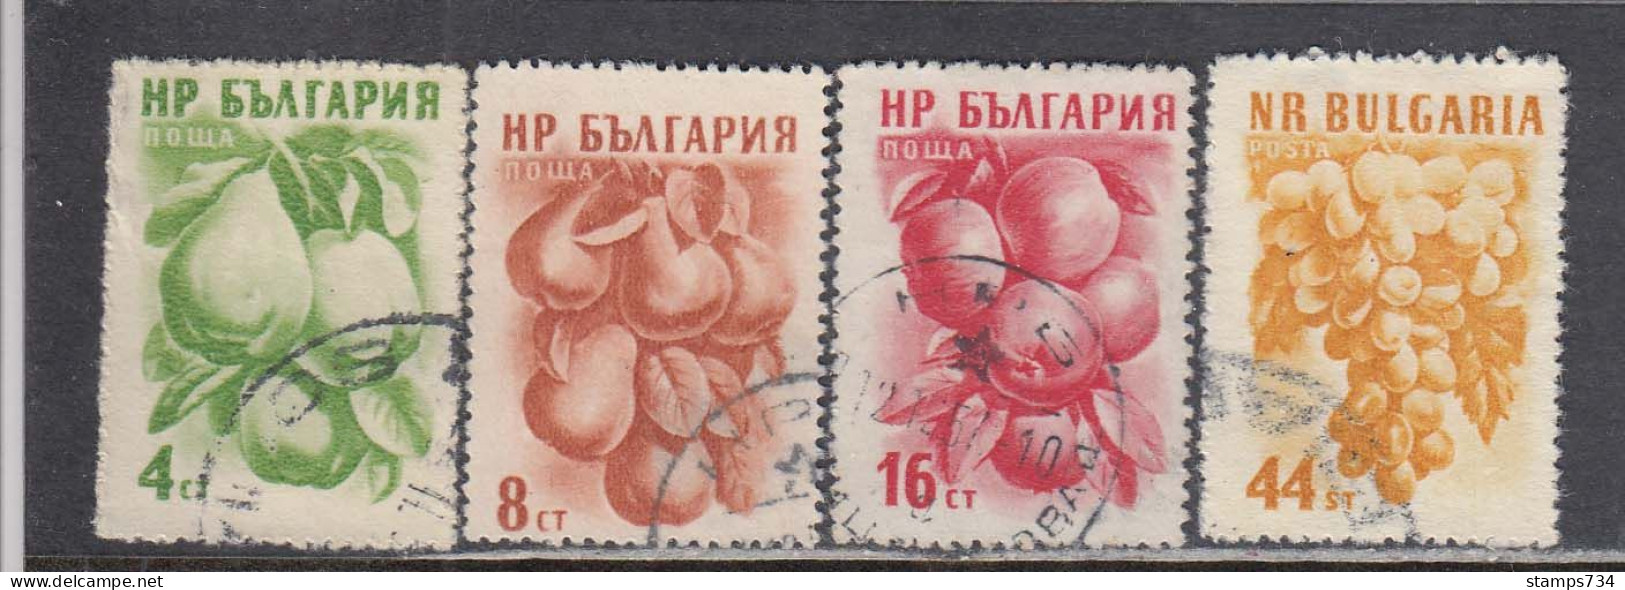 Bulgaria 1957 - Fruits(3), Mi-Nr. 1022/25, Used - Used Stamps